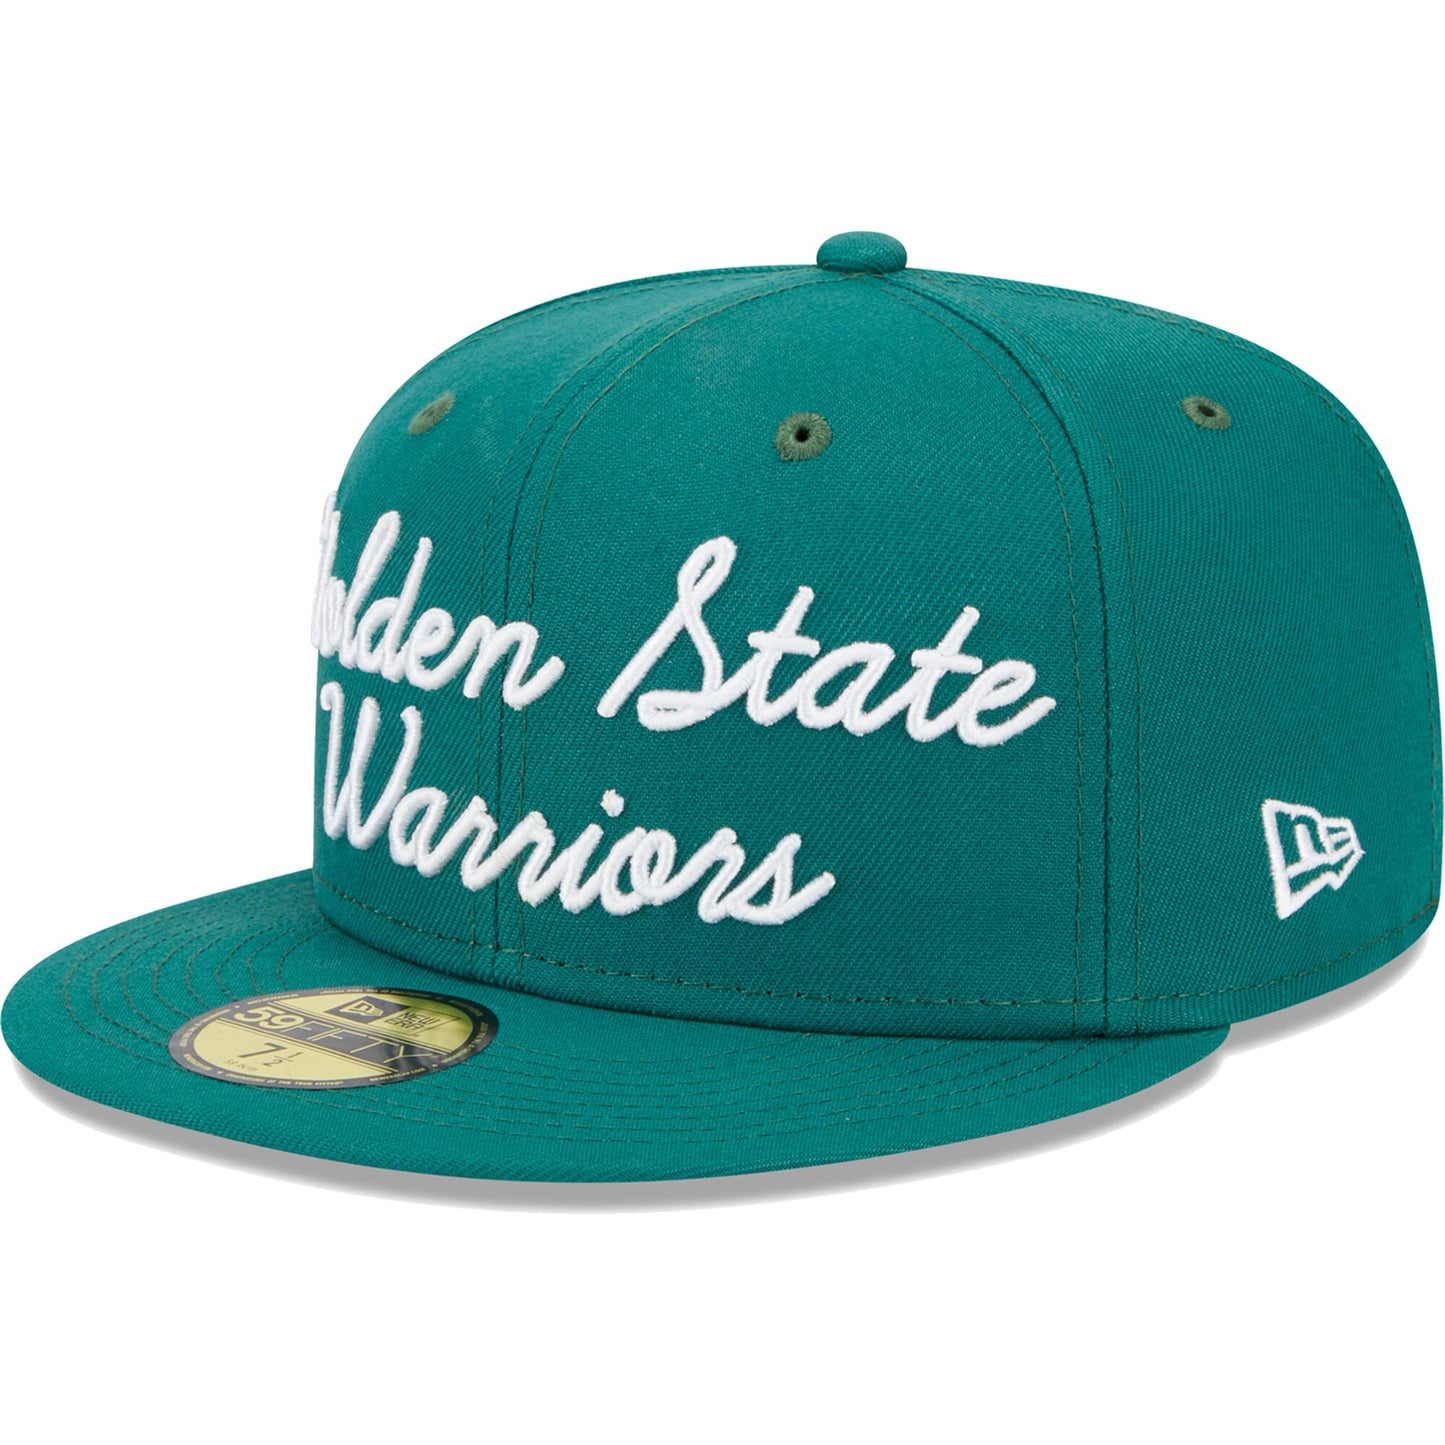 Golden State Warriors New Era Script 59FIFTY Fitted Hat - Augusta Green